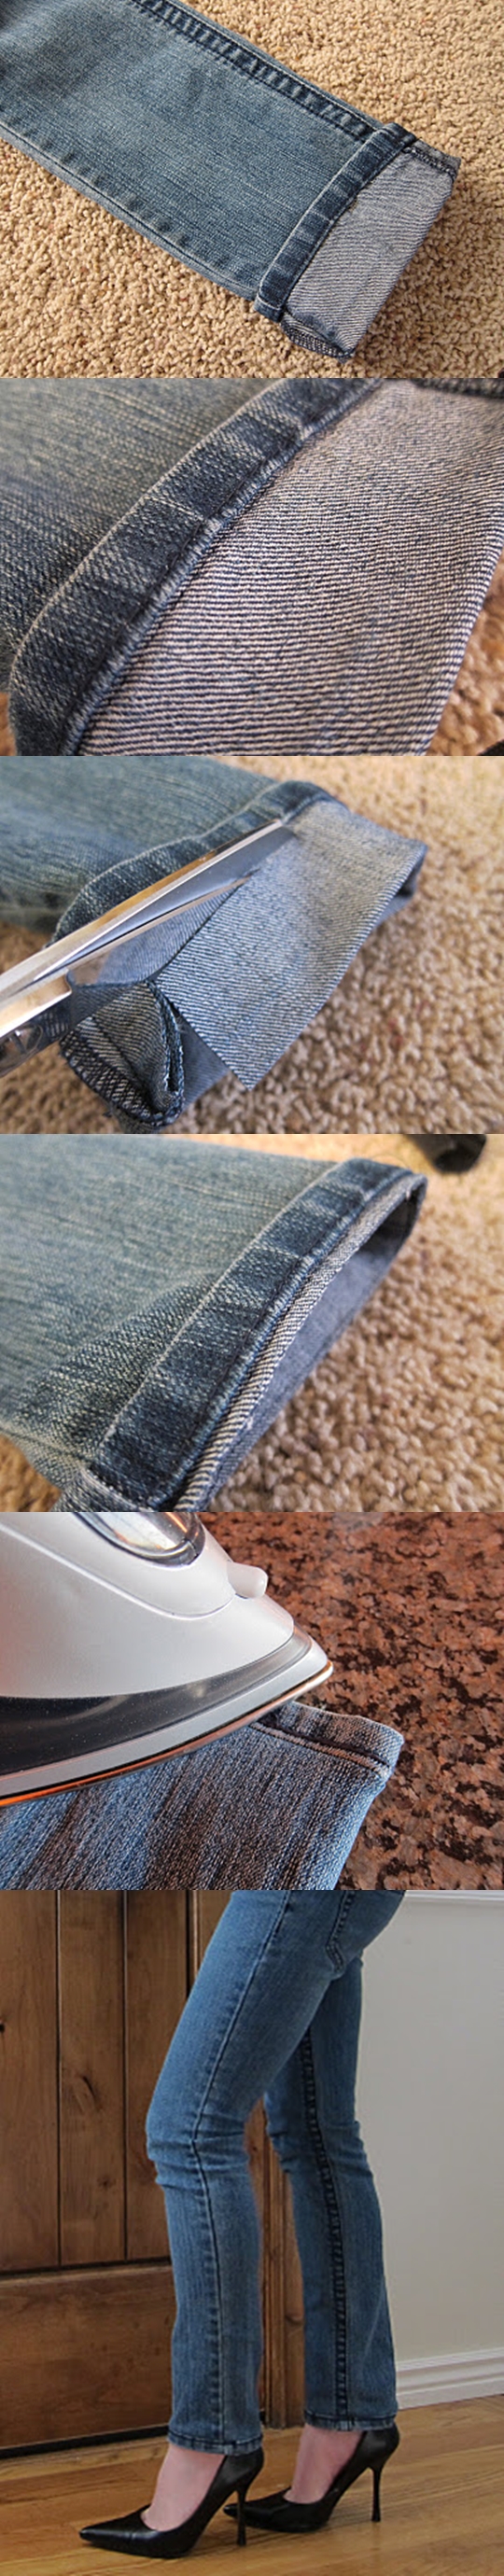 Hem Jeans M Wonderful DIY Shorten long jeans but keep the original hem